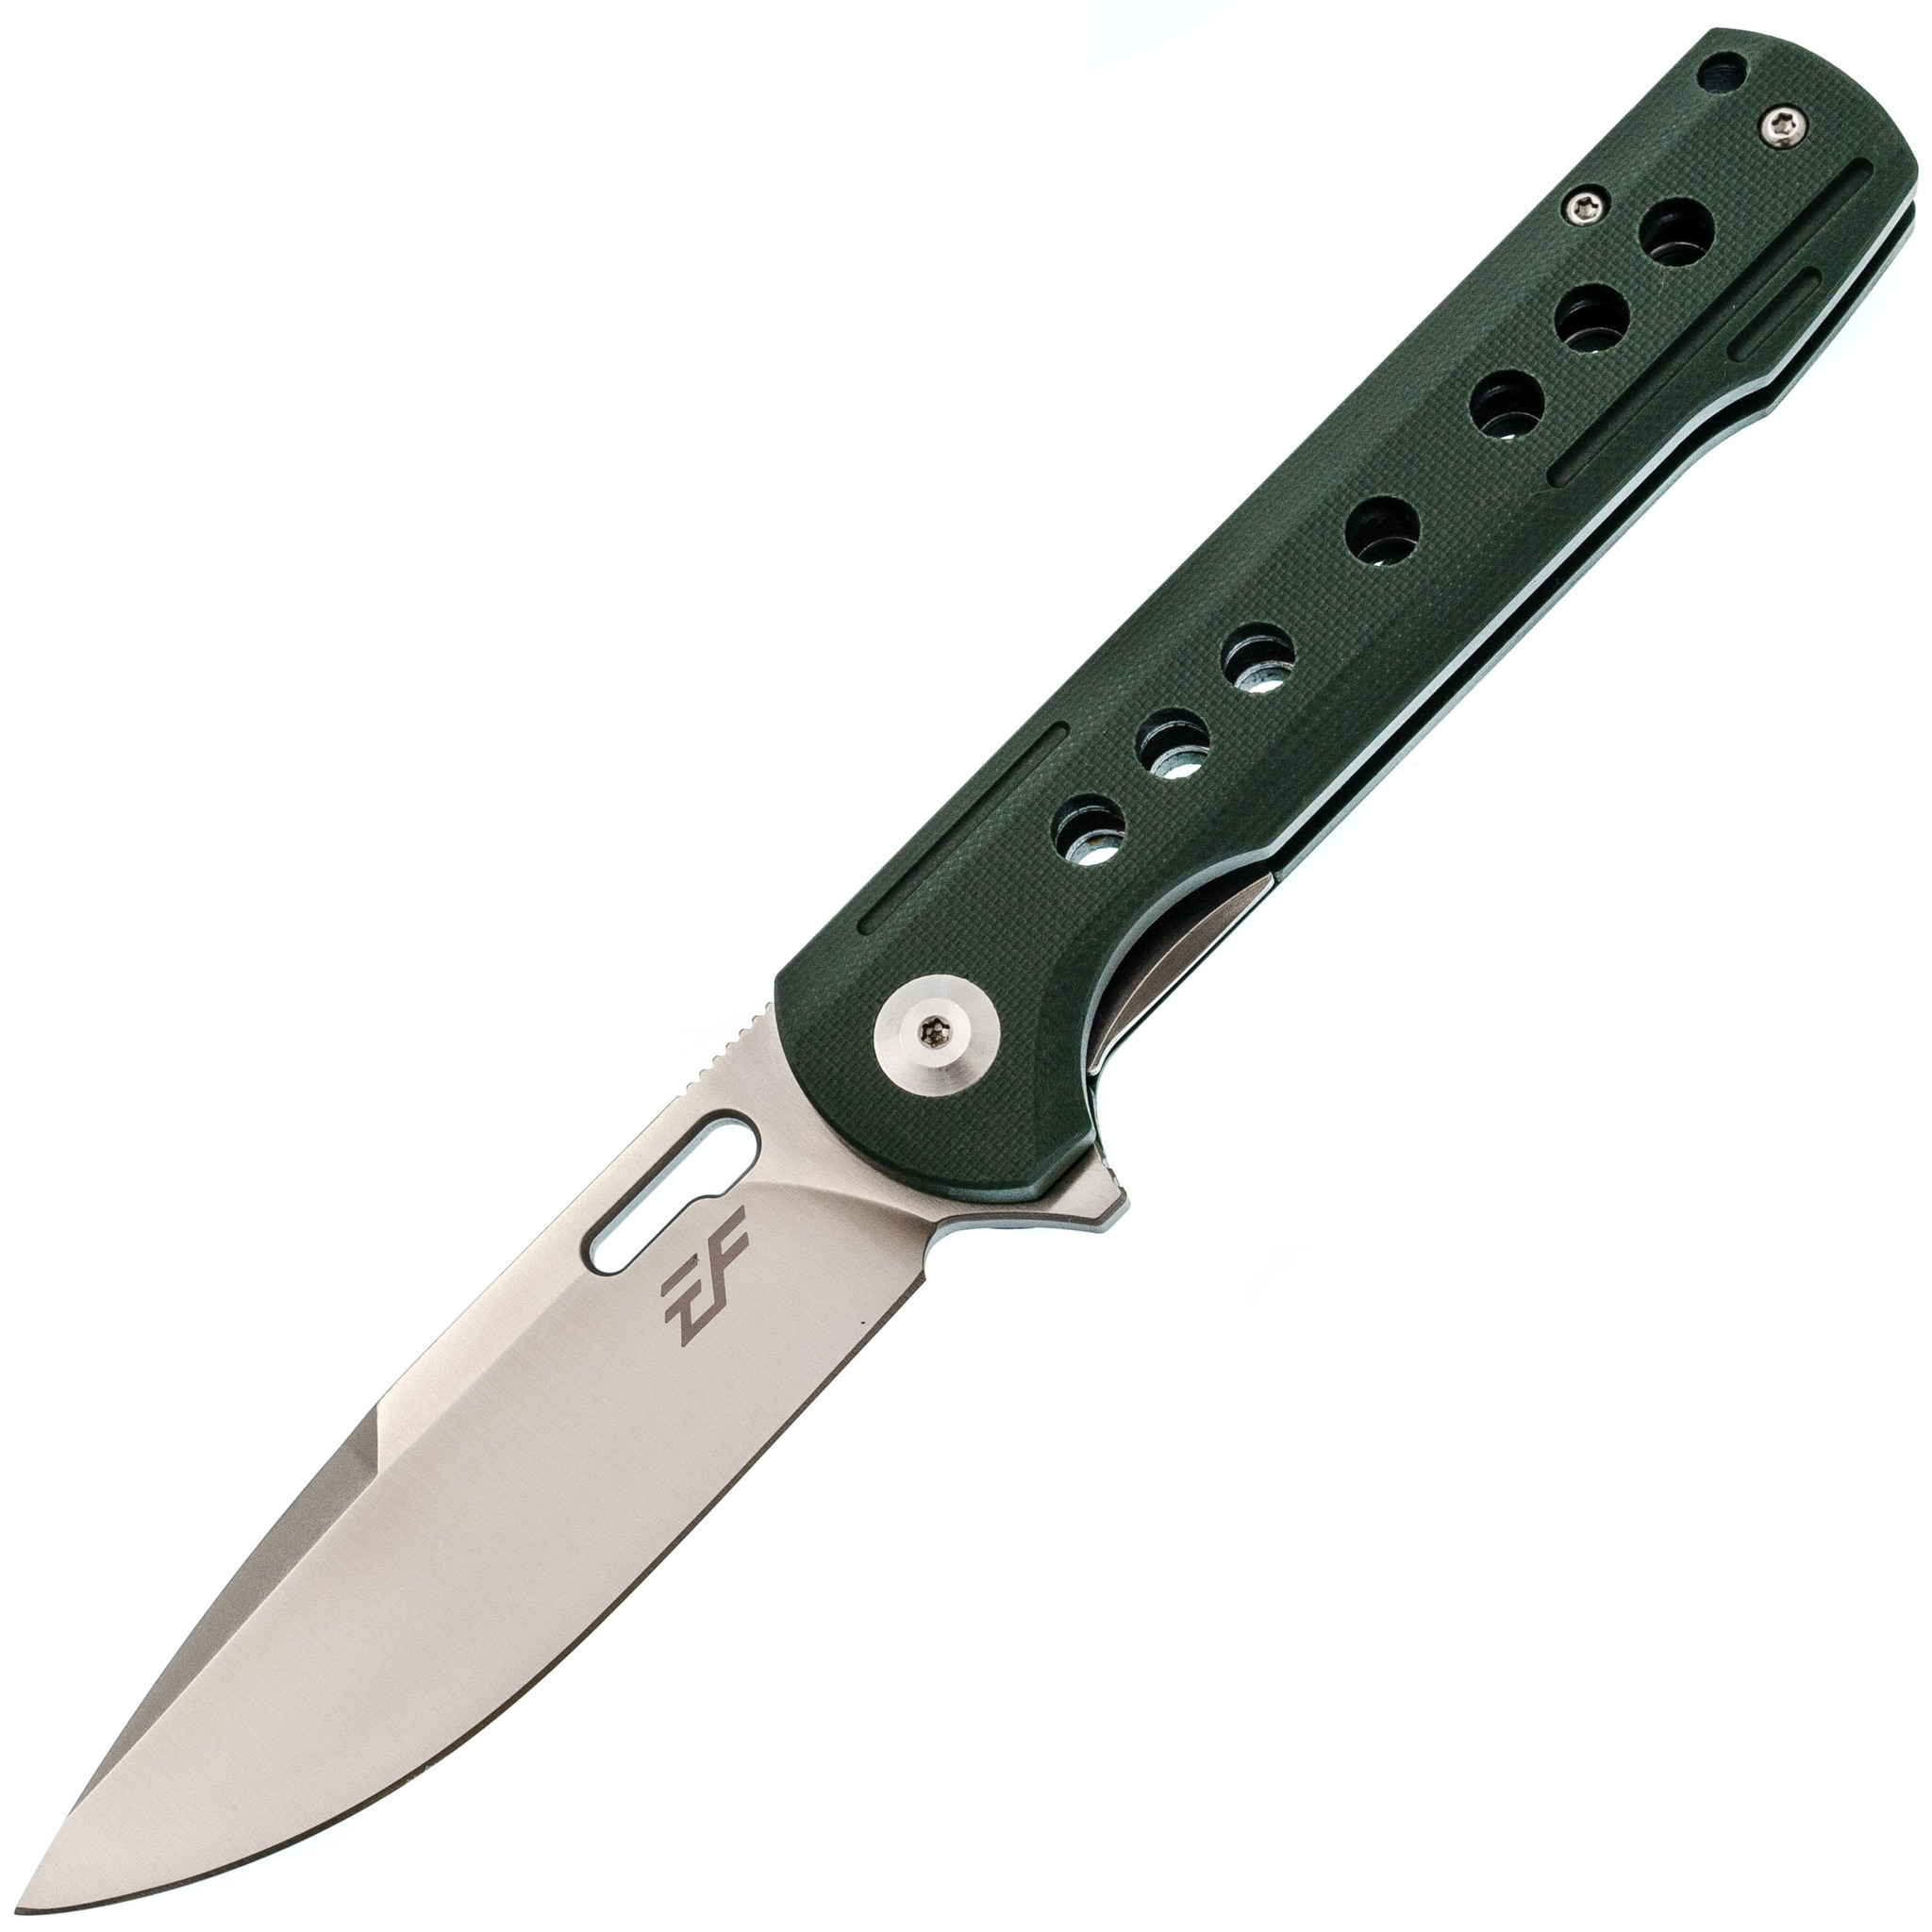 Складной нож Eafengrow EF910 Green, сталь D2, рукоять G10 складной табурет green glade